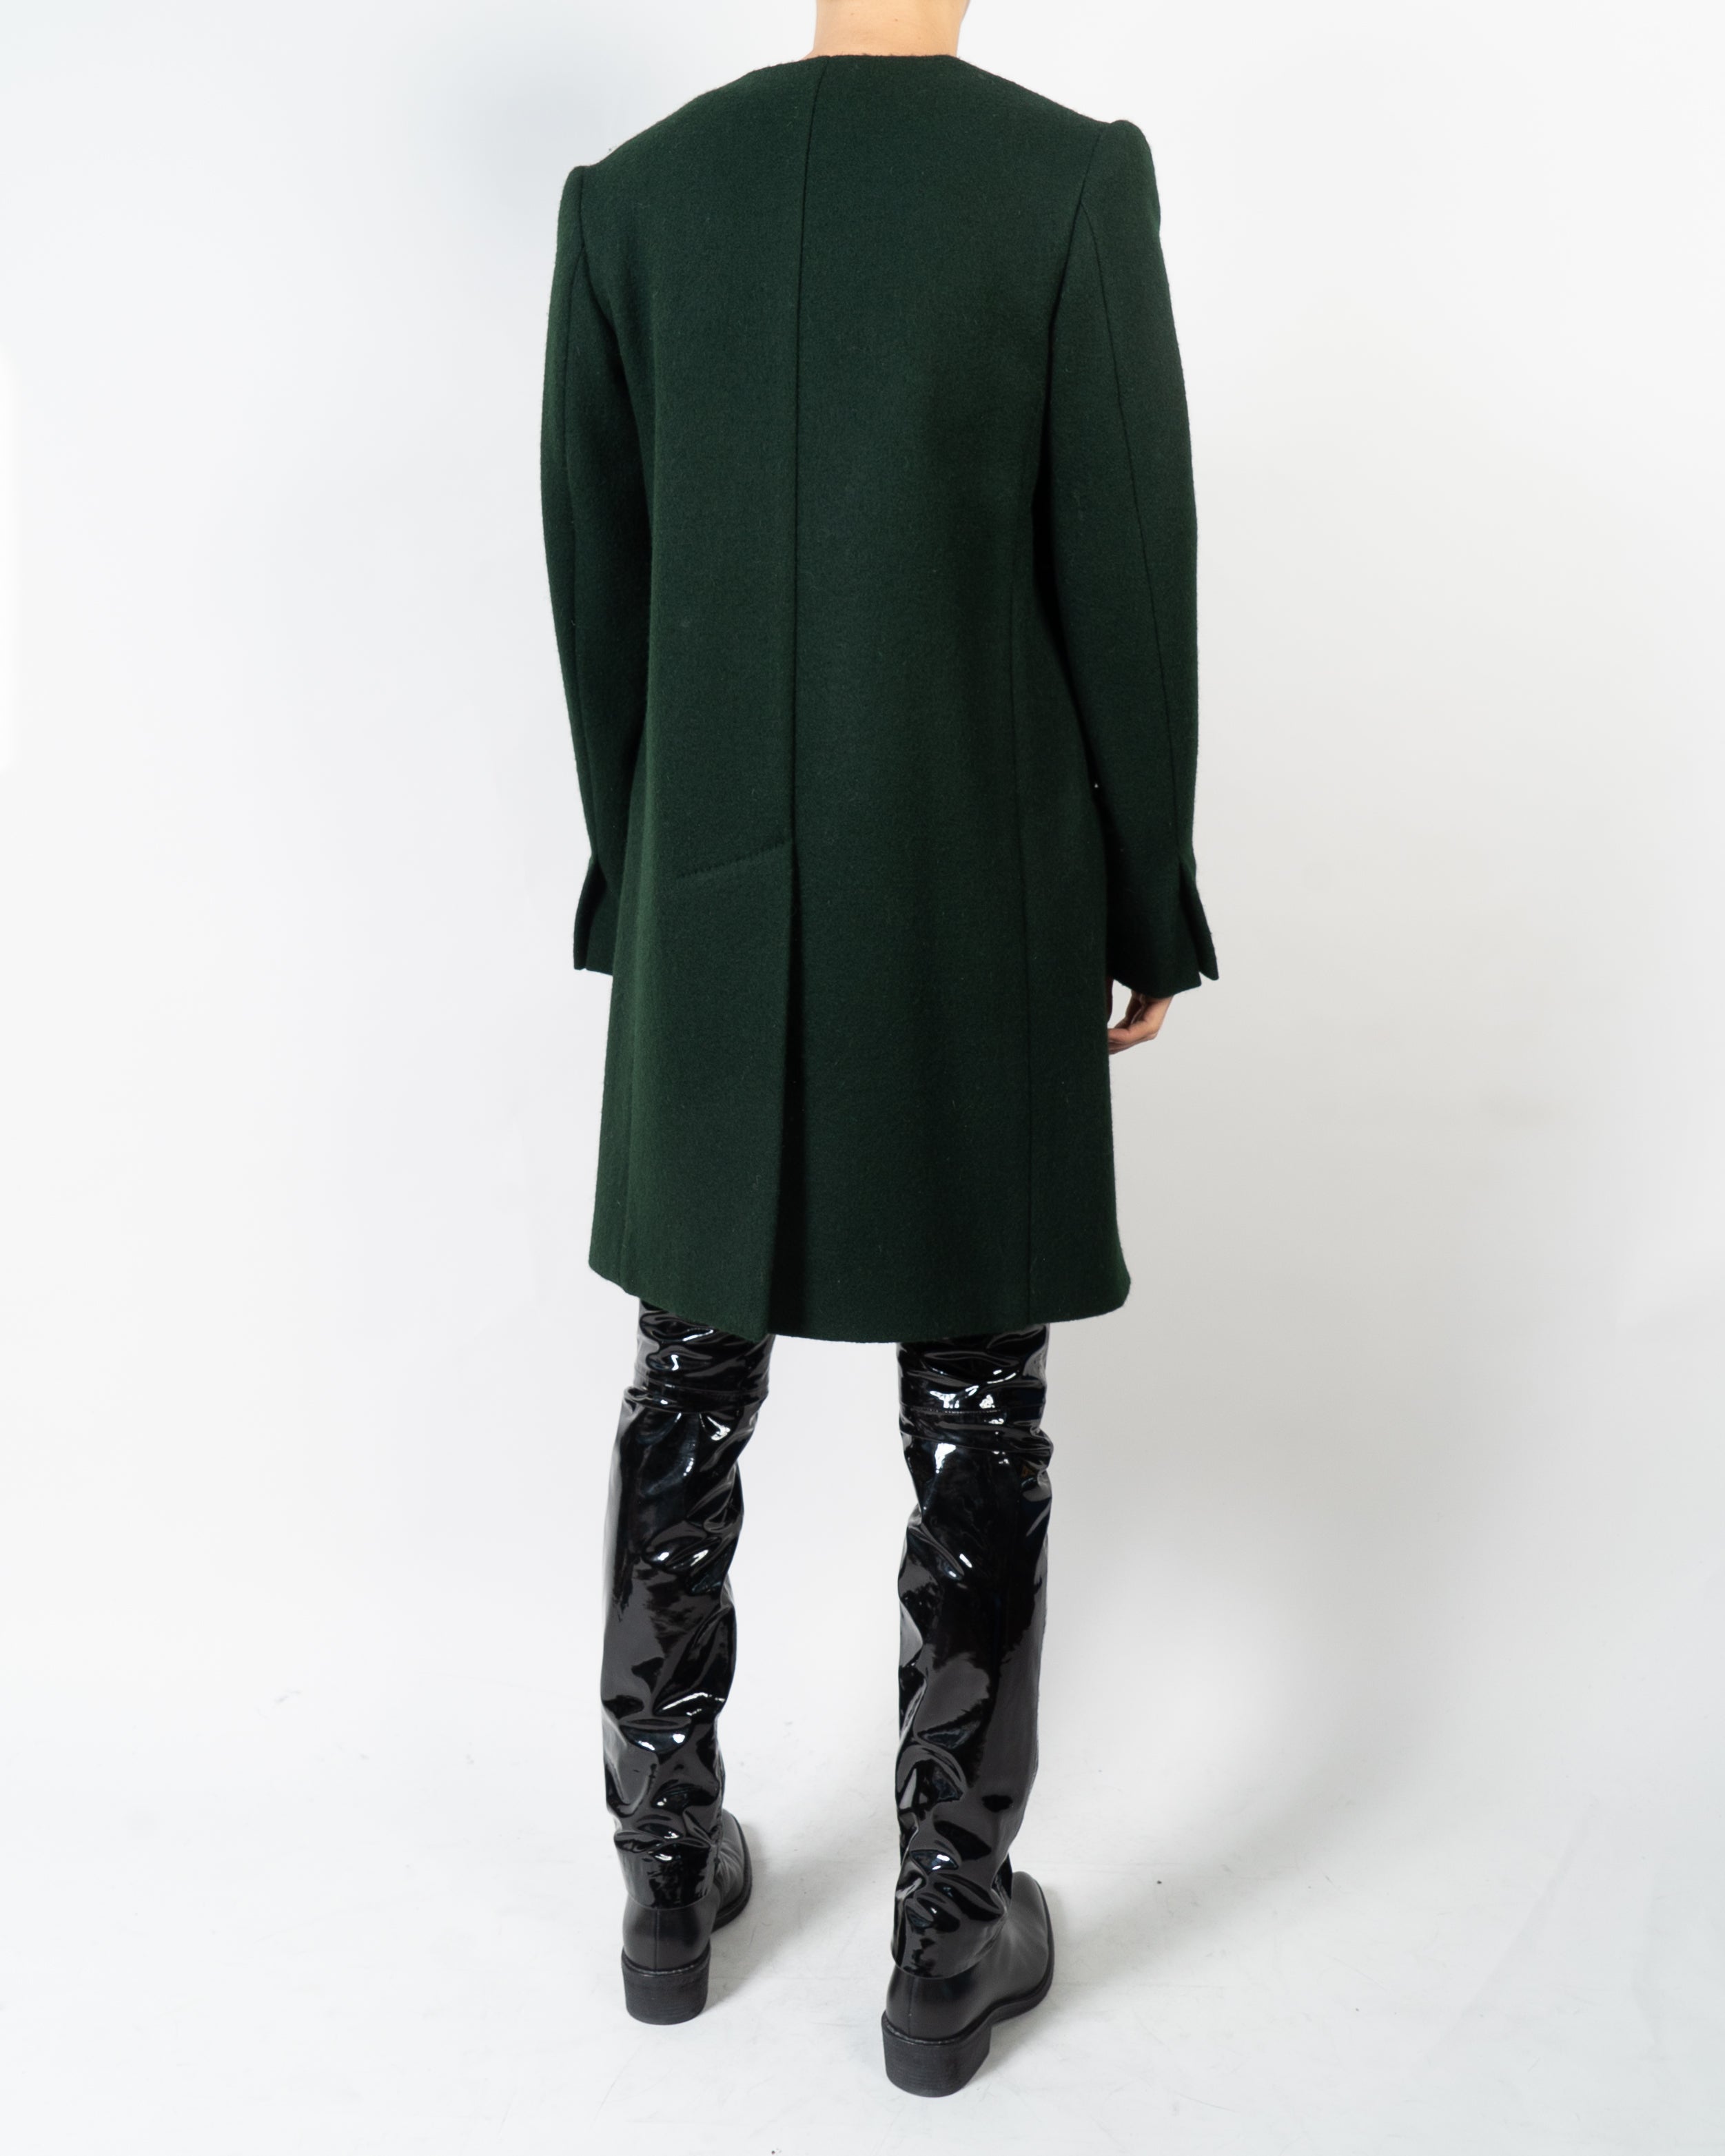 FW13 Green Wool Coat Sample